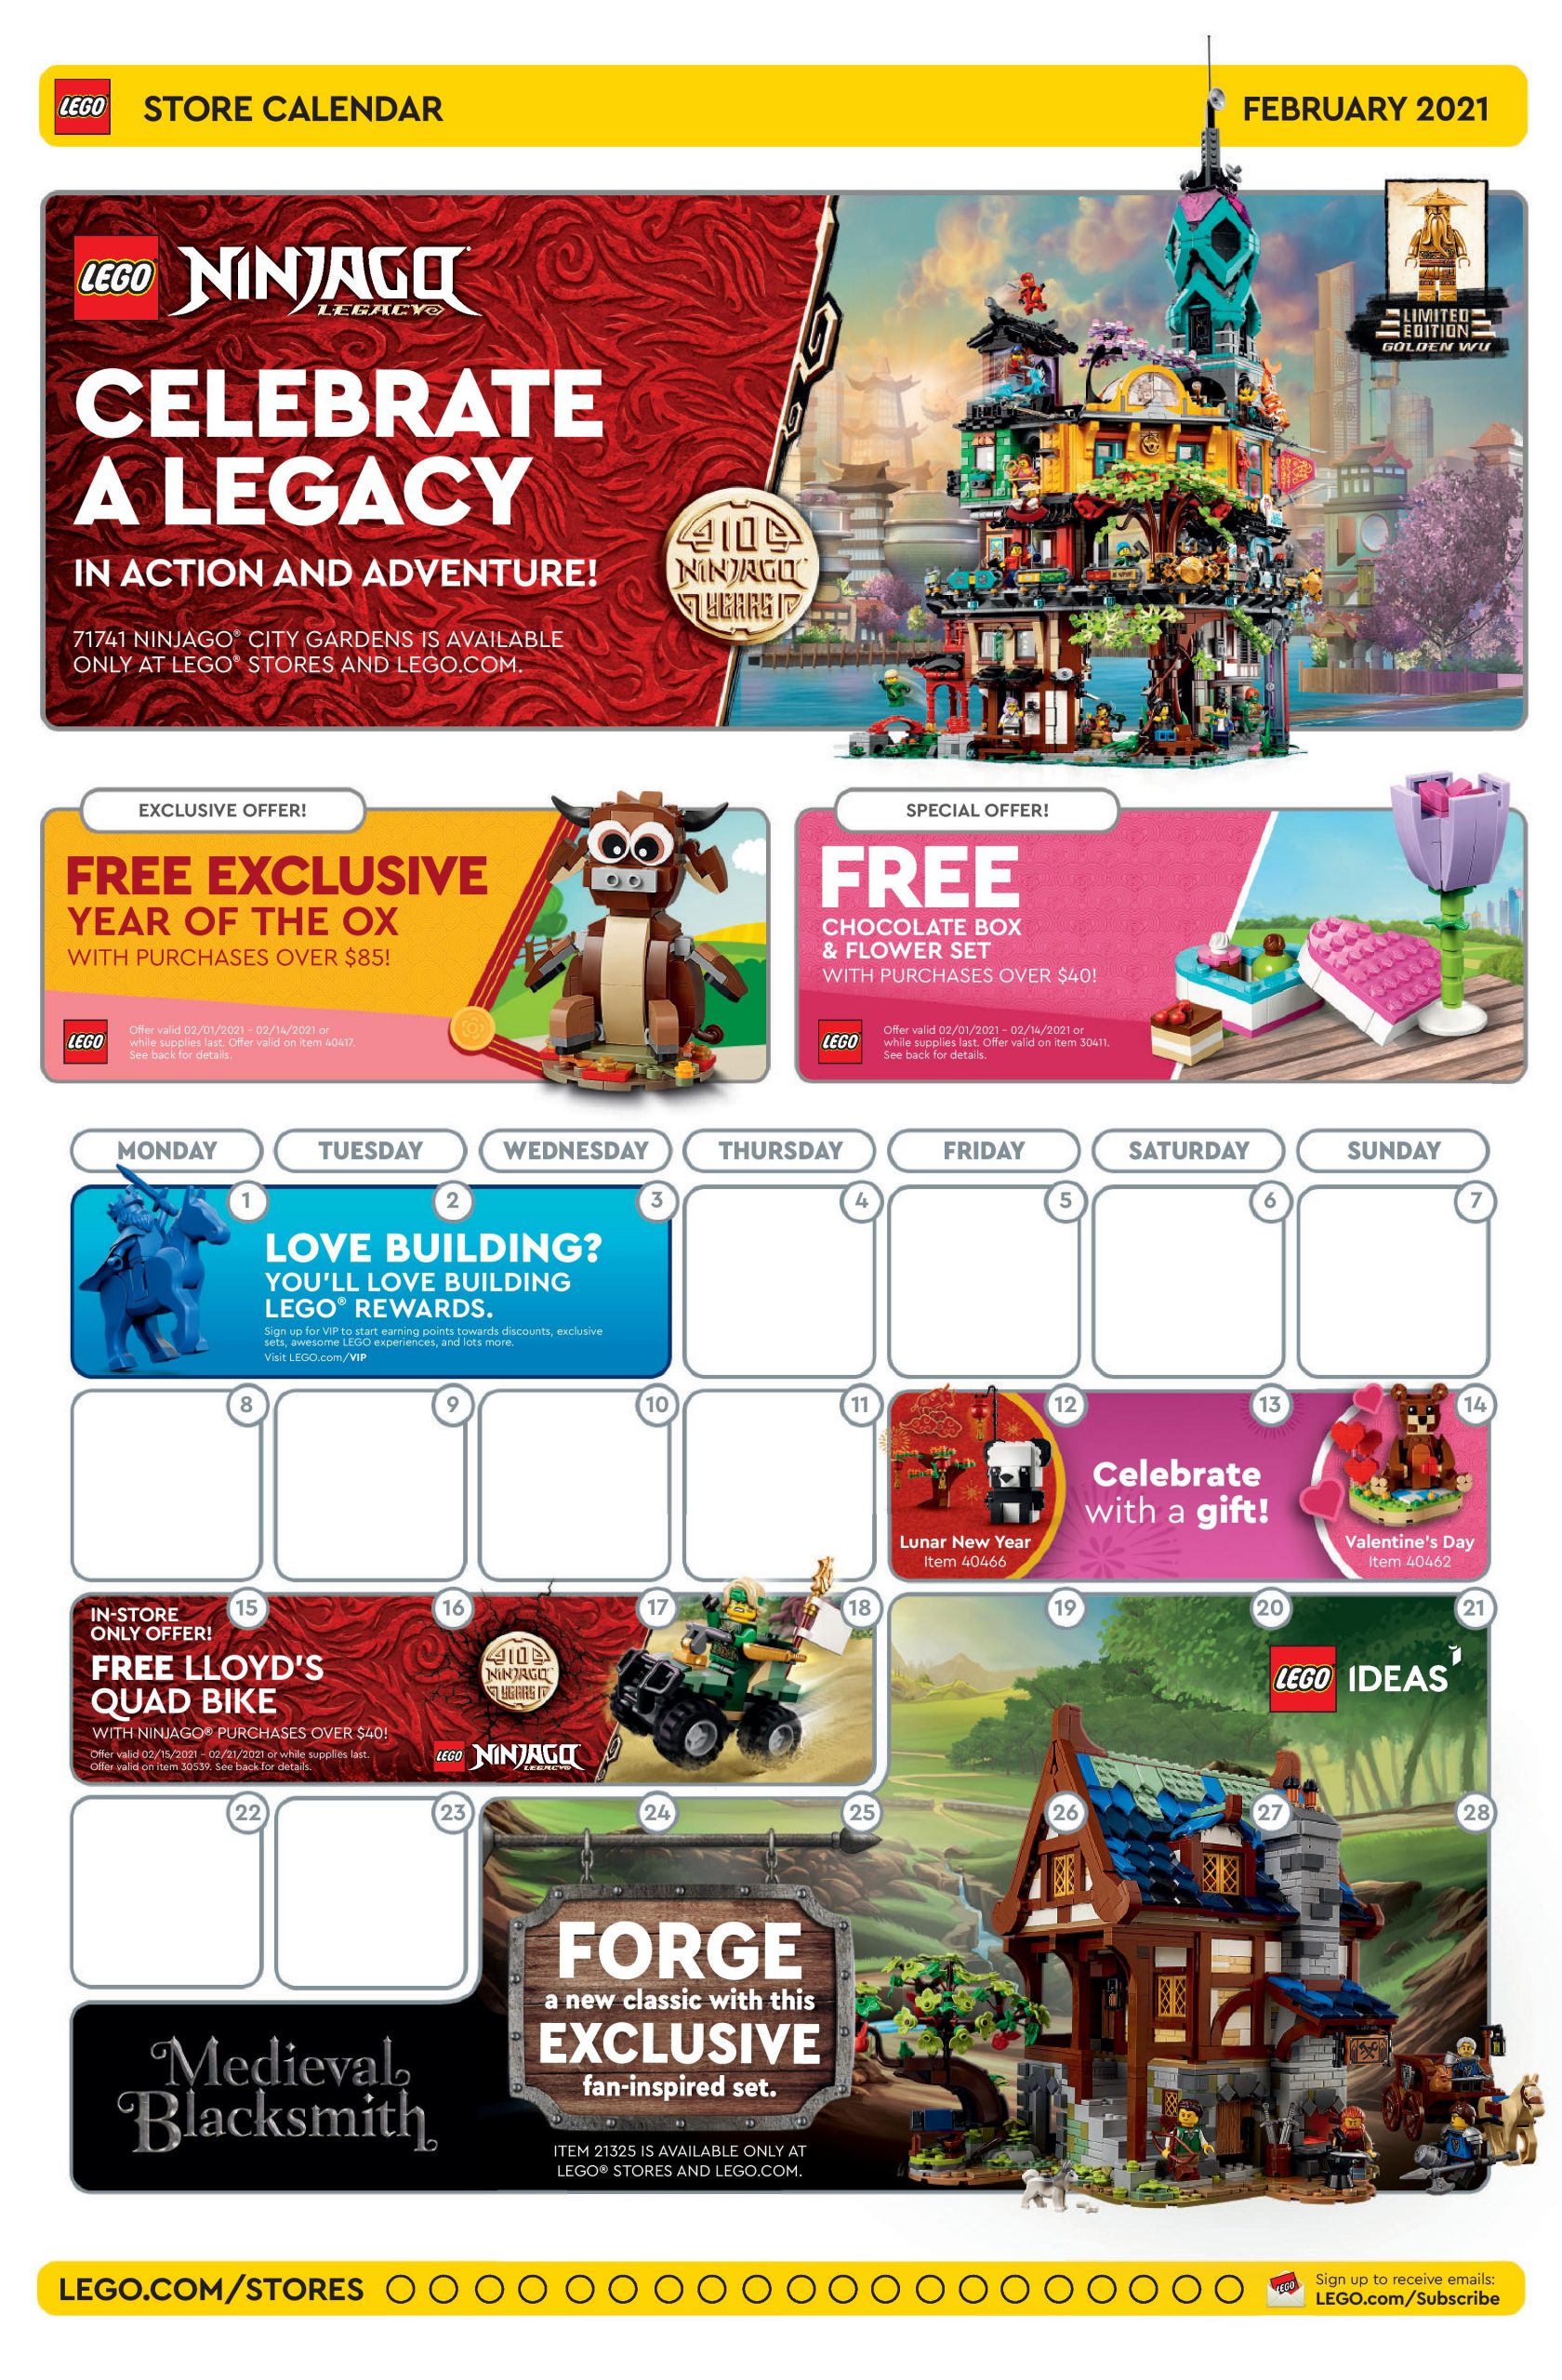 Lego May 2022 Calendar Lego February 2021 Store Calendar Promotions & Events - The Brick Fan